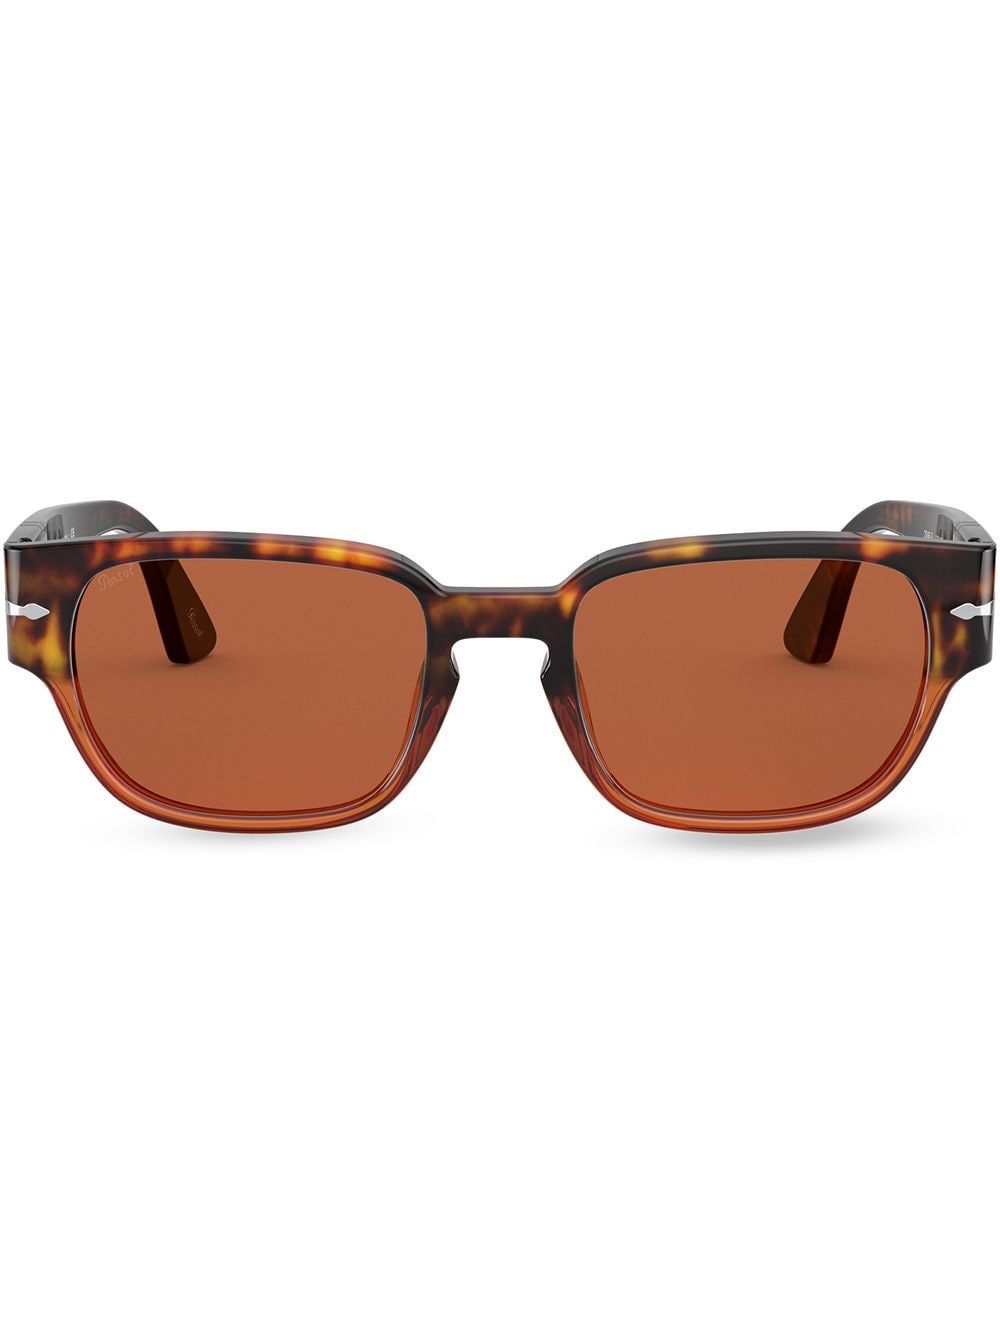 Persol tortoiseshell-effect square-frame sunglasses - Green von Persol